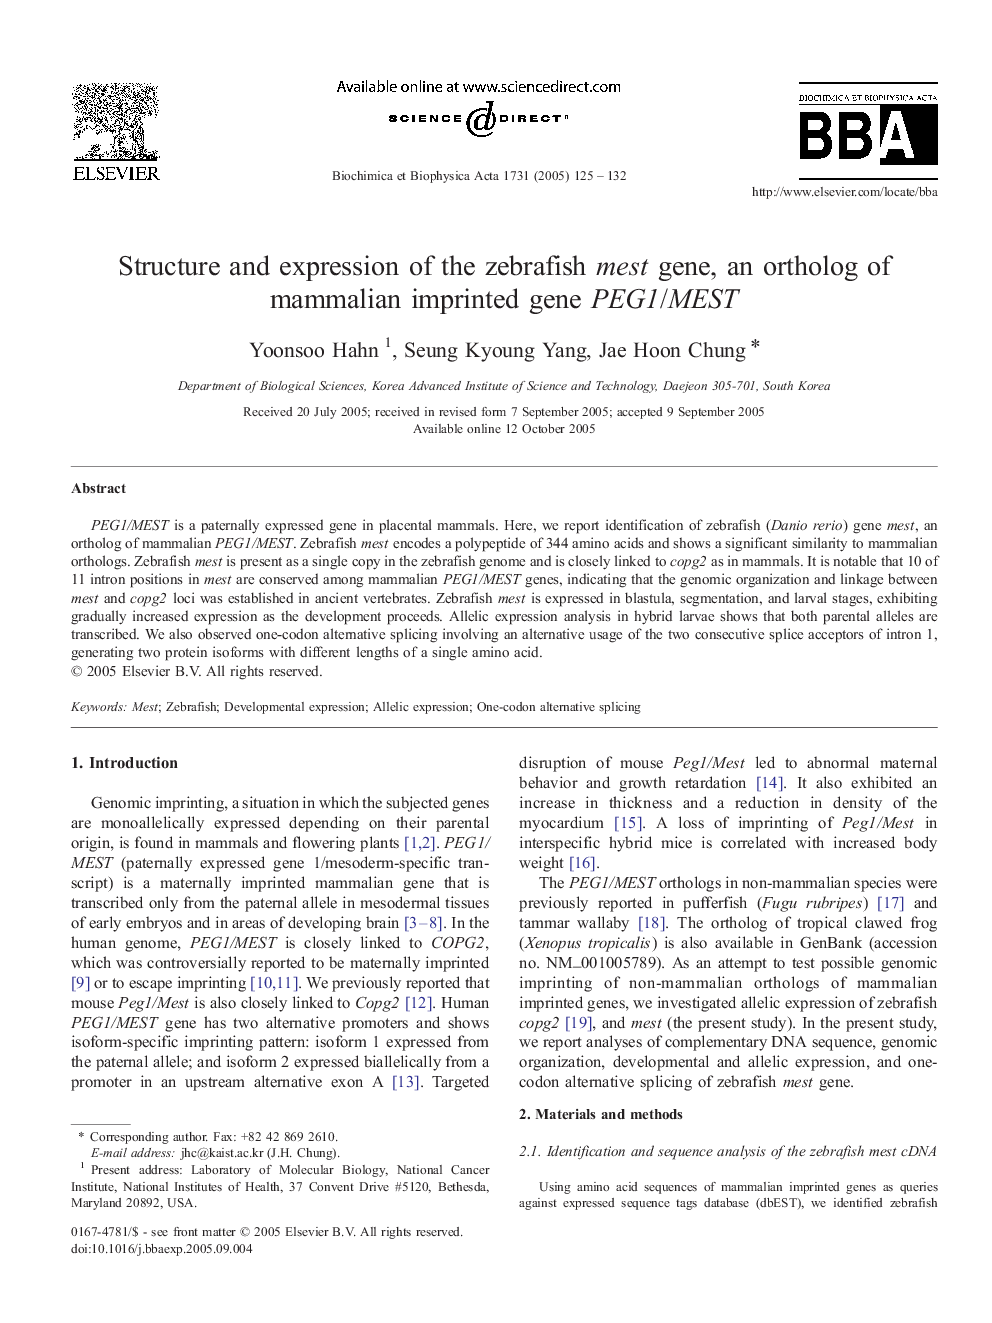 Structure and expression of the zebrafish mest gene, an ortholog of mammalian imprinted gene PEG1/MEST